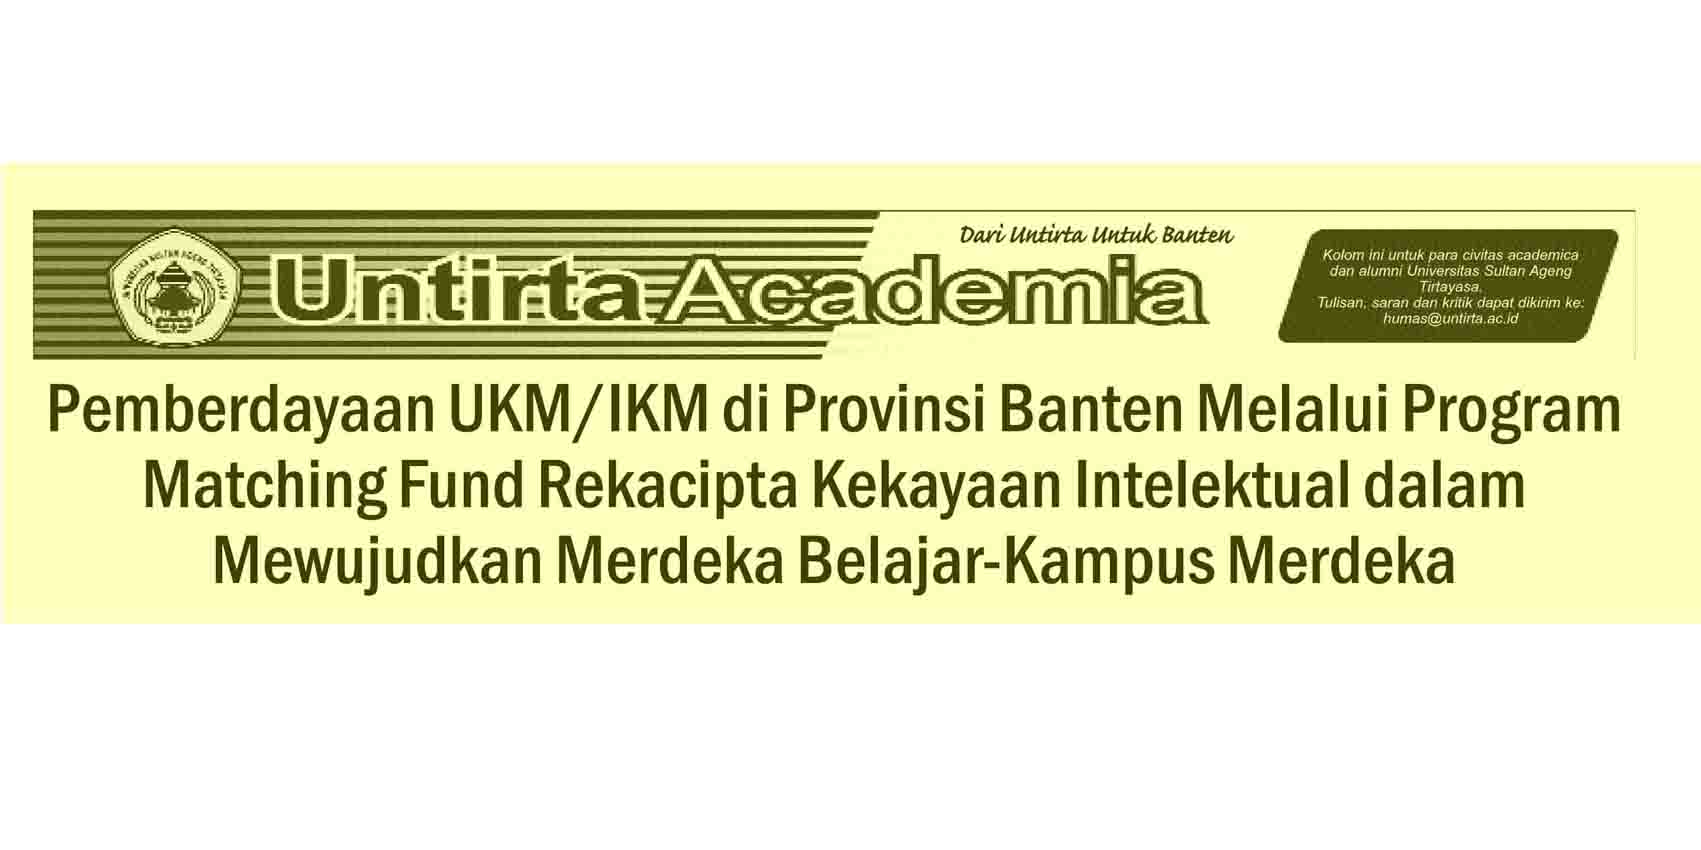 Pemberdayaan UKM/IKM di Provinsi Banten Melalui Program Matching Fund Rekacipta Kekayaan Intelektual dalam Mewujudkan Merdeka Belajar-Kampus Merdeka